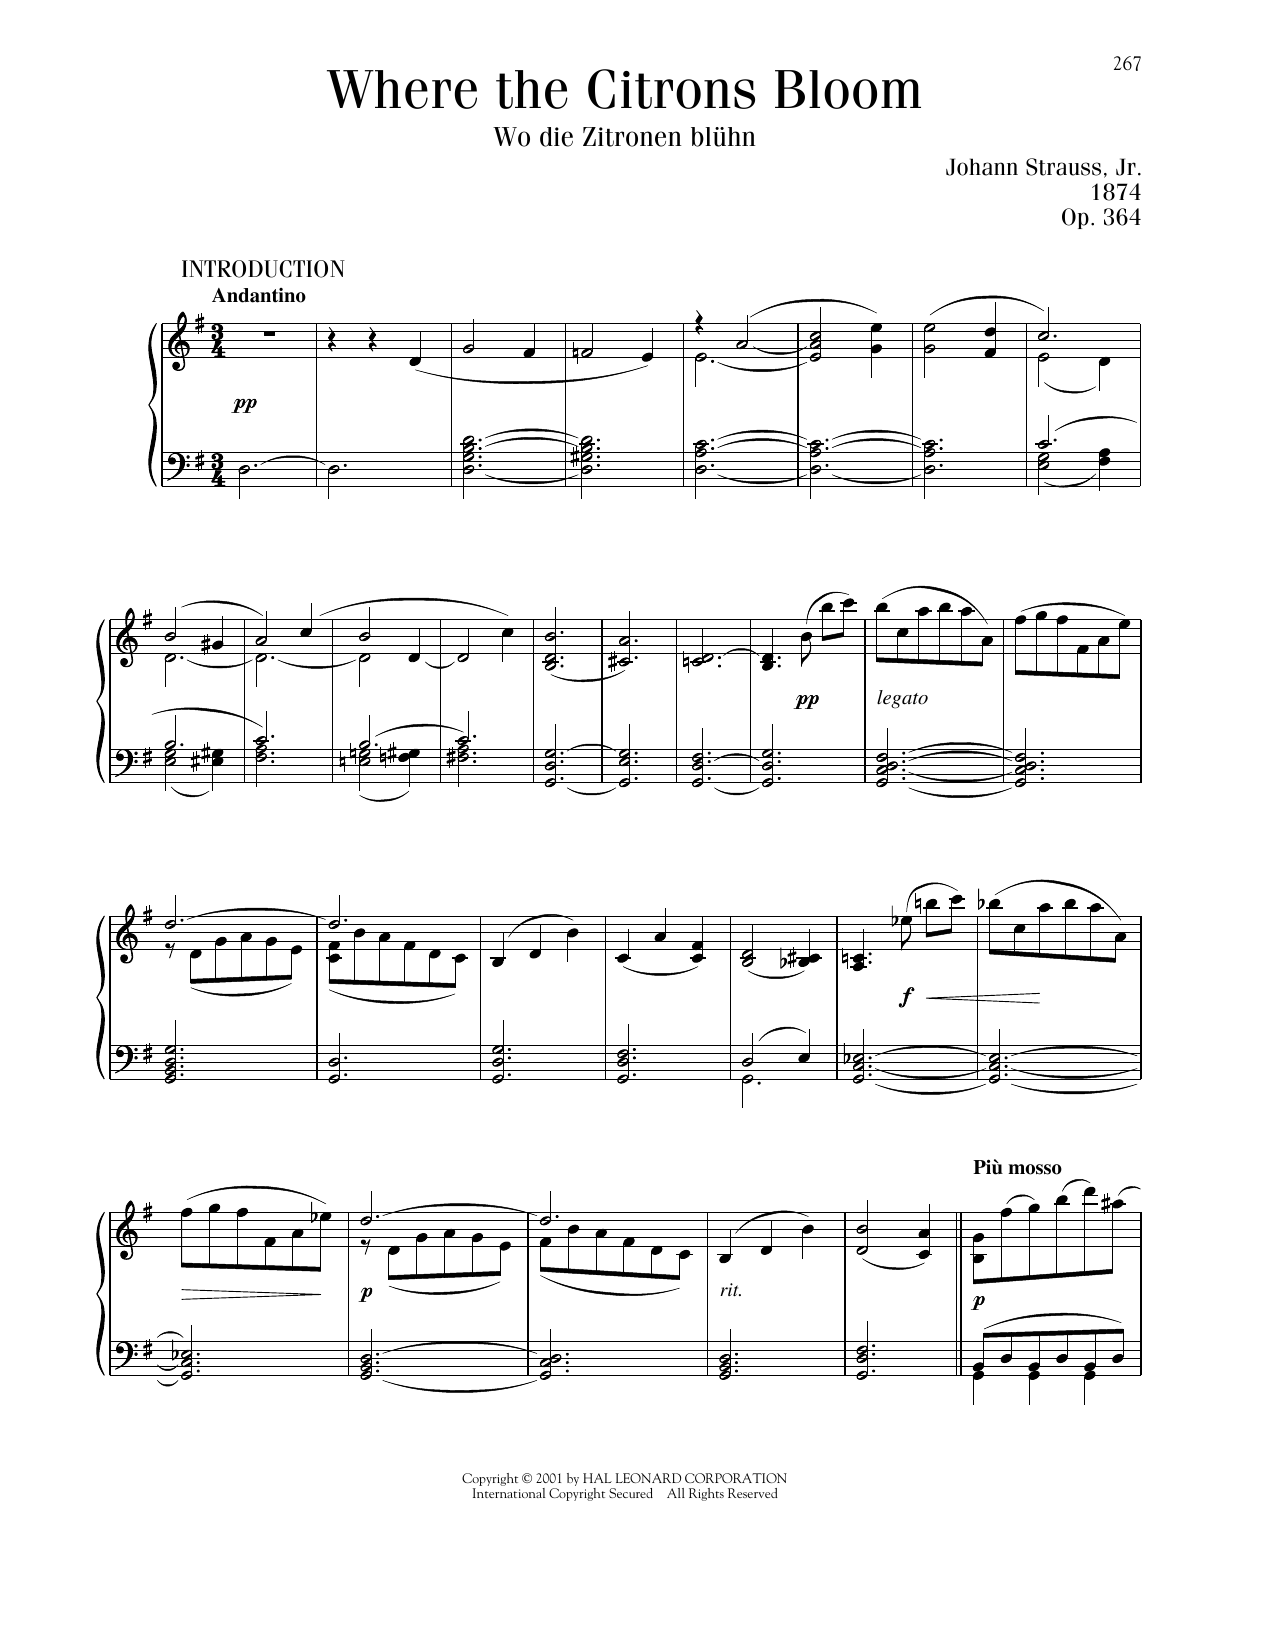 Johann Strauss Where The Citrons Bloom, Op. 364 sheet music notes printable PDF score